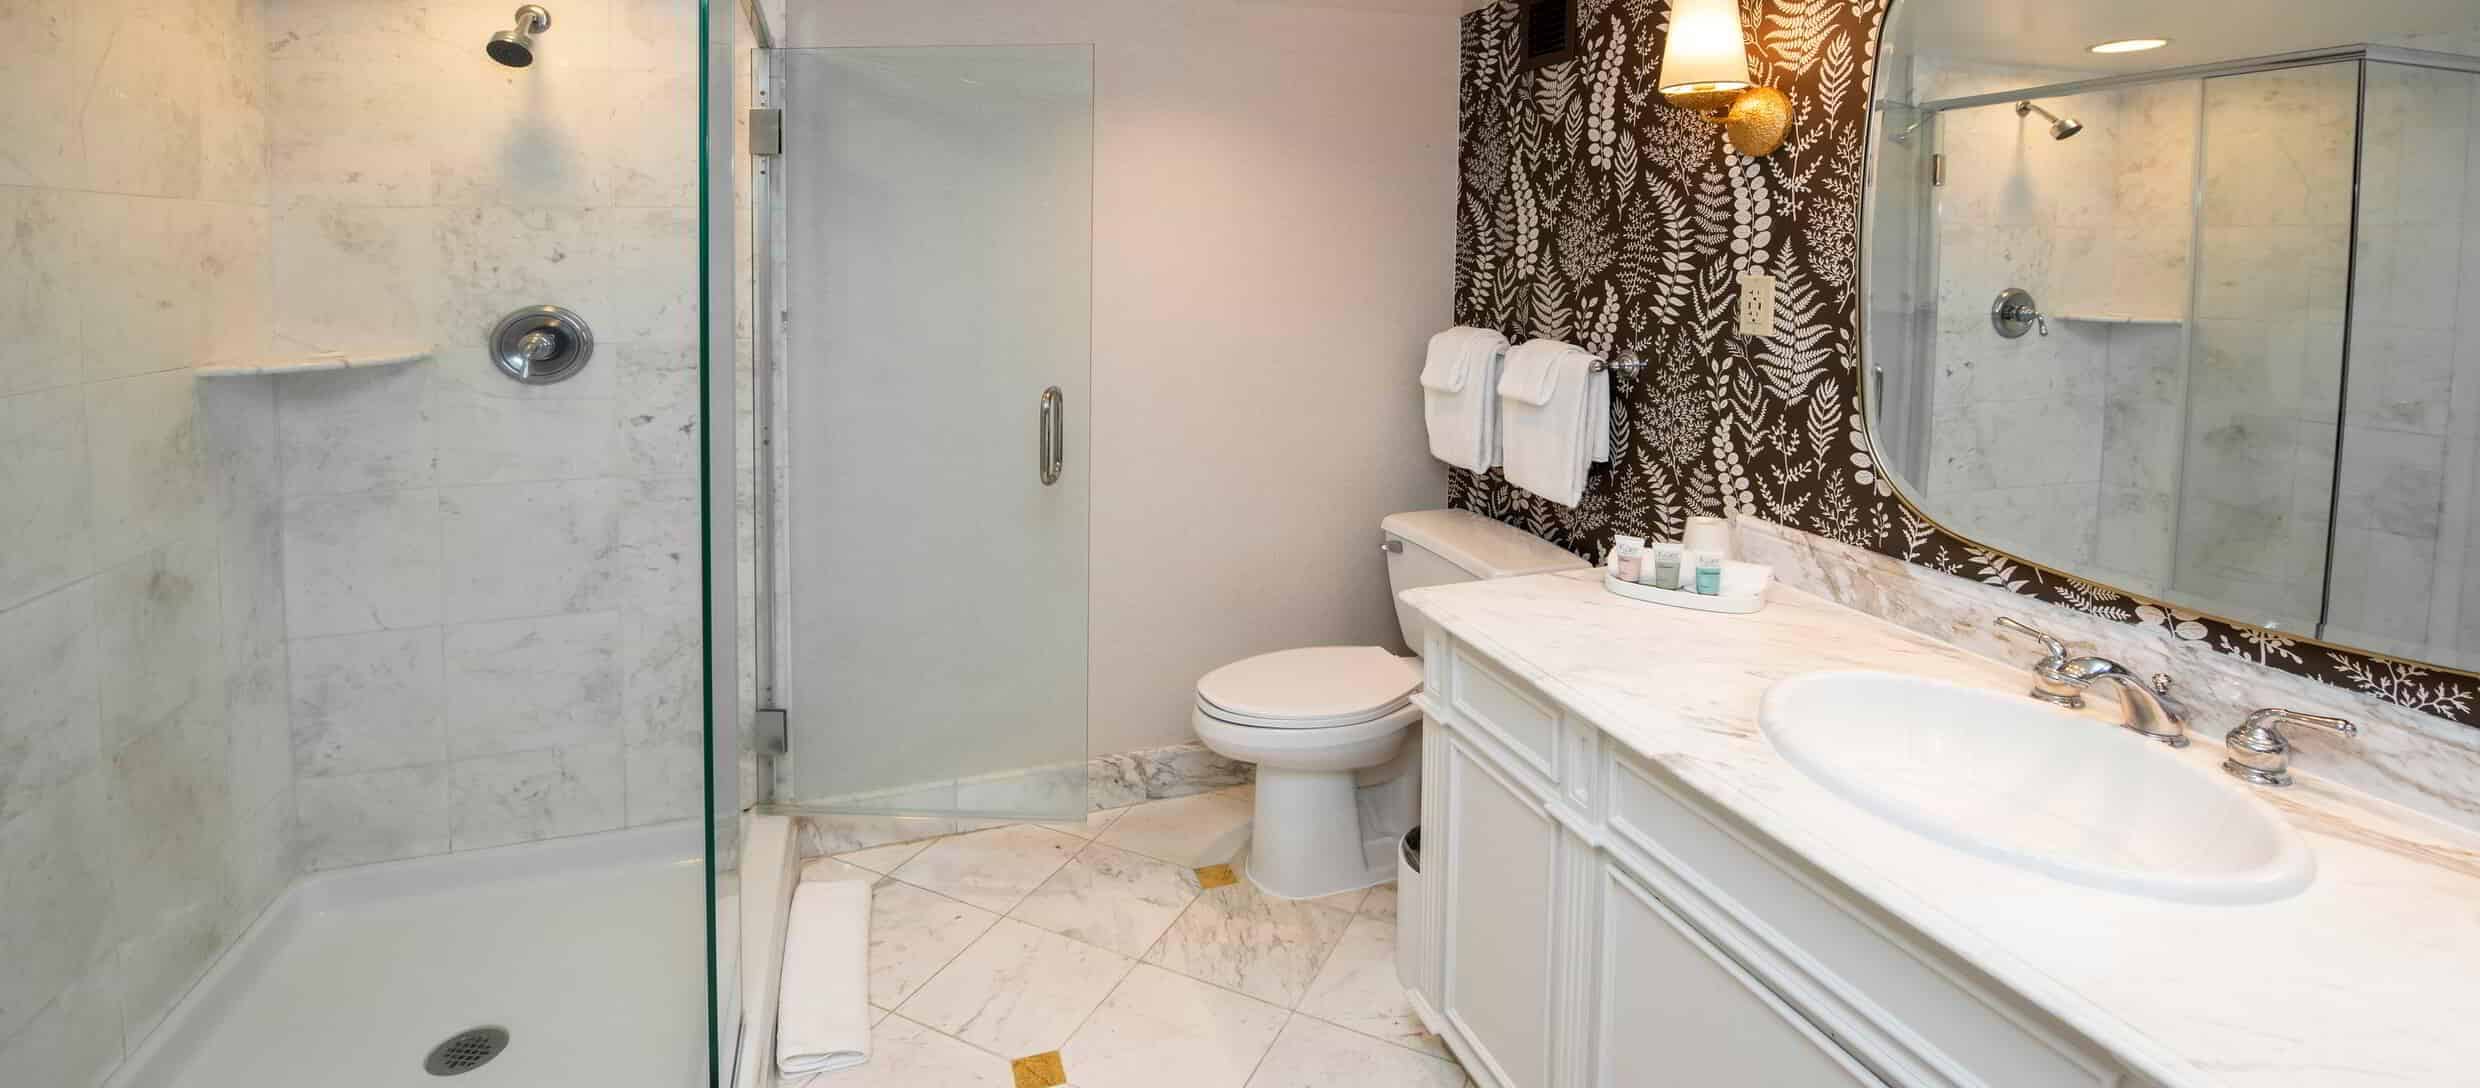 beau-rivage-hotel-deluxe-bathroom-walk-in-shower.jpg.image.2480.1088.high